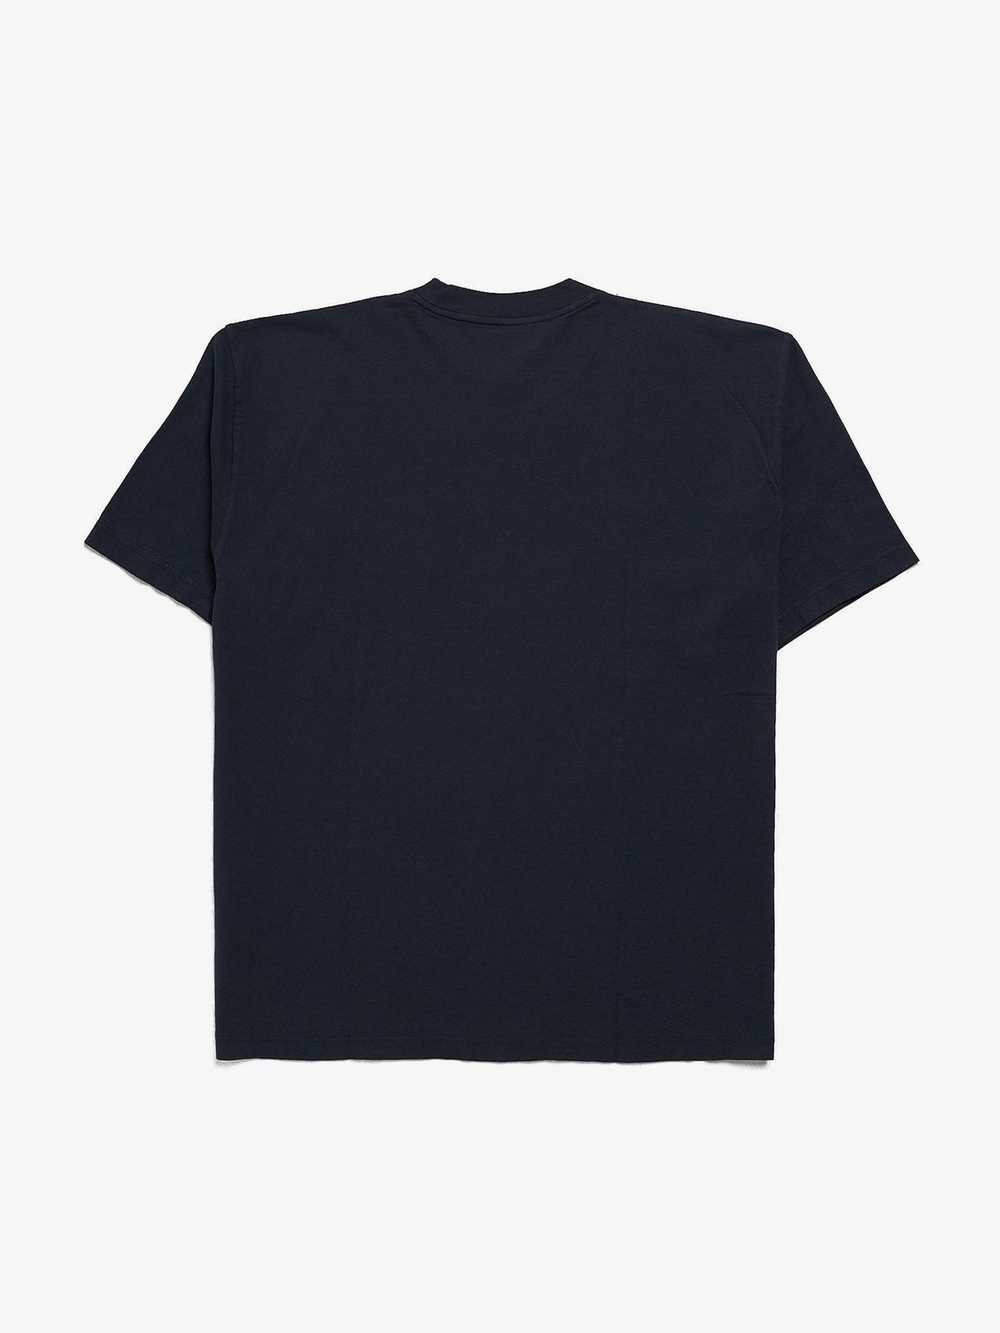 Yeezy Season Navy Oversized T-Shirt - image 2